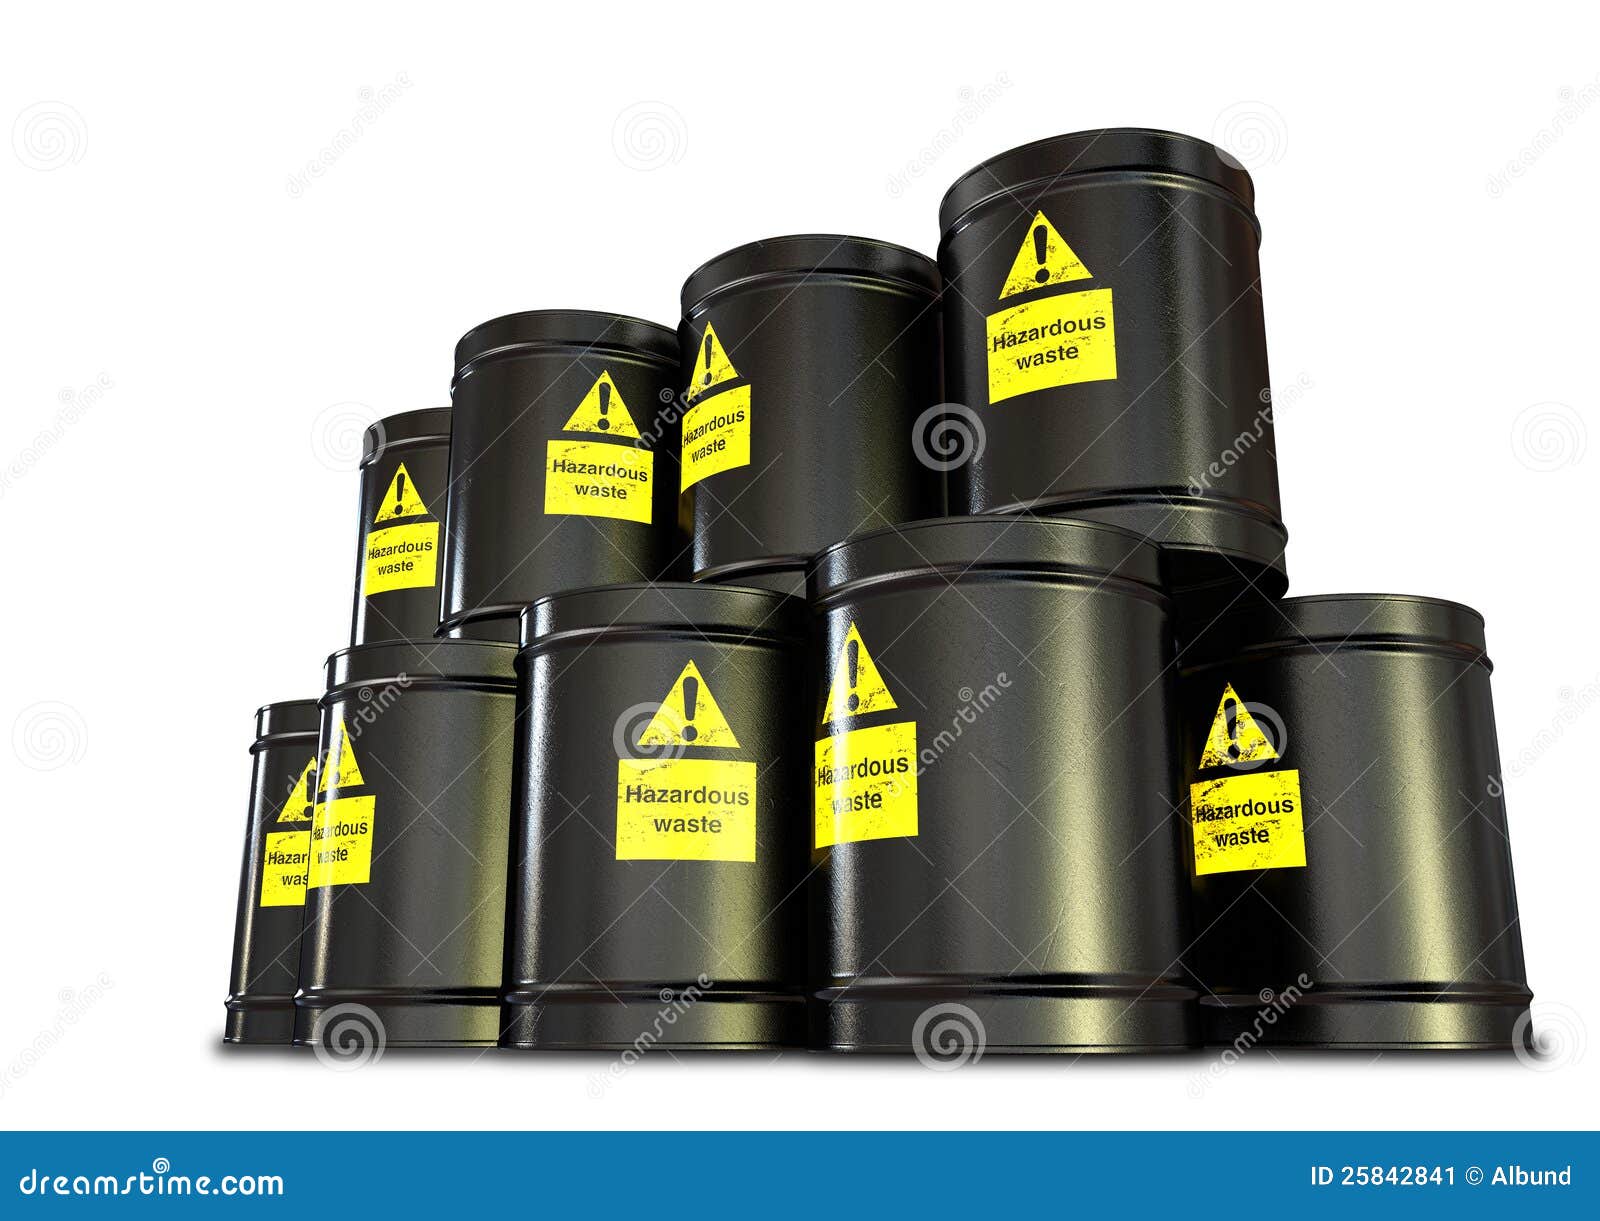 hazardous waste barrel stack